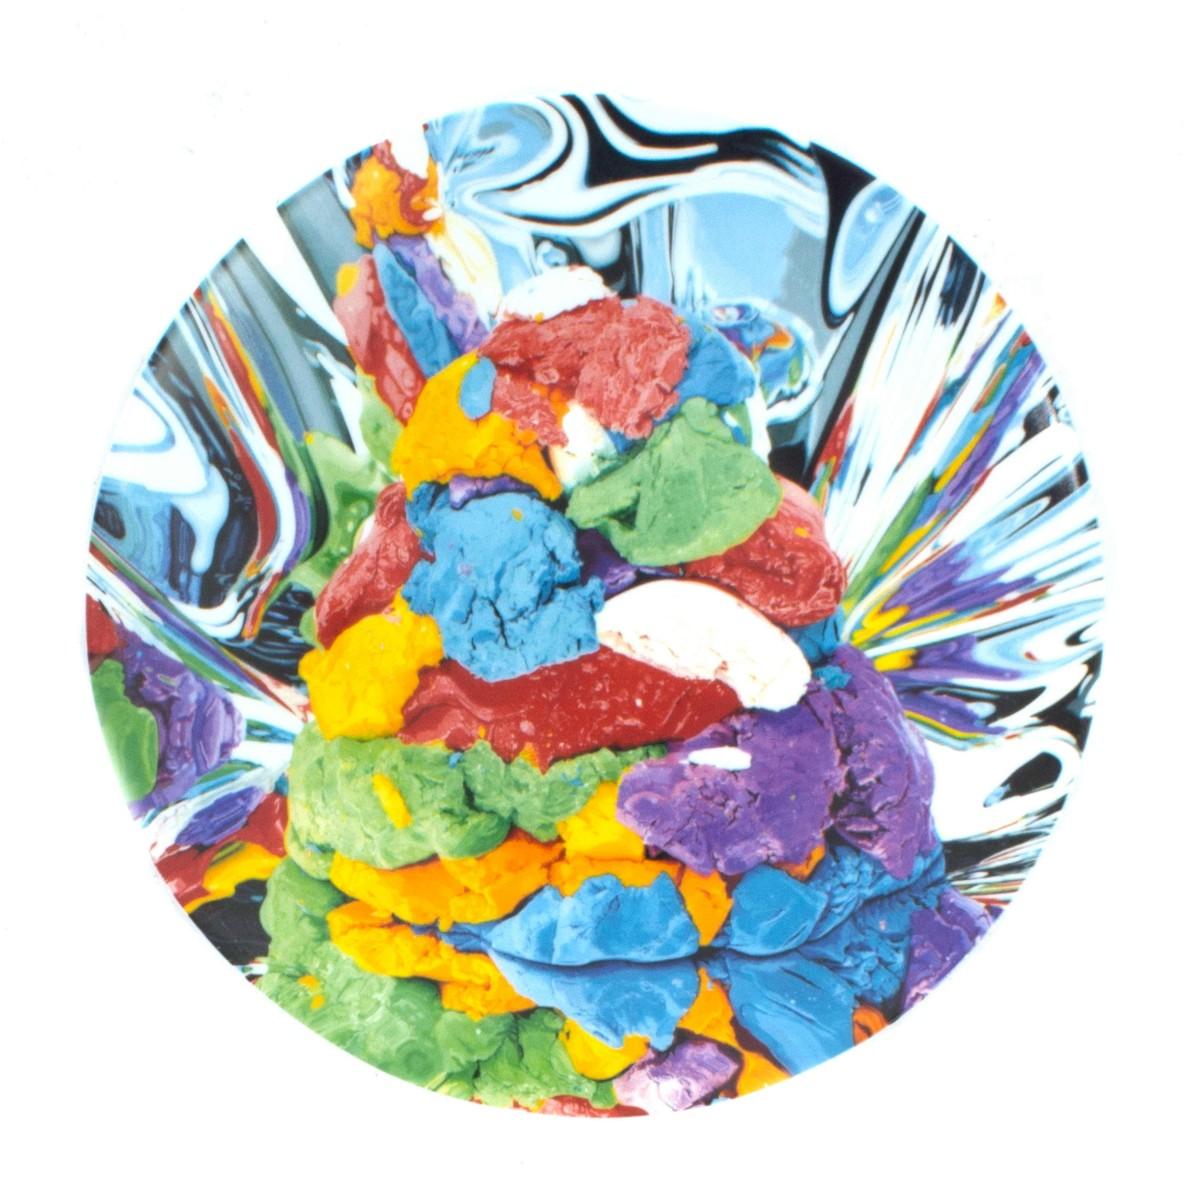 Jeff Koons Limited Edition Play-Doh Plate for Bernardaud